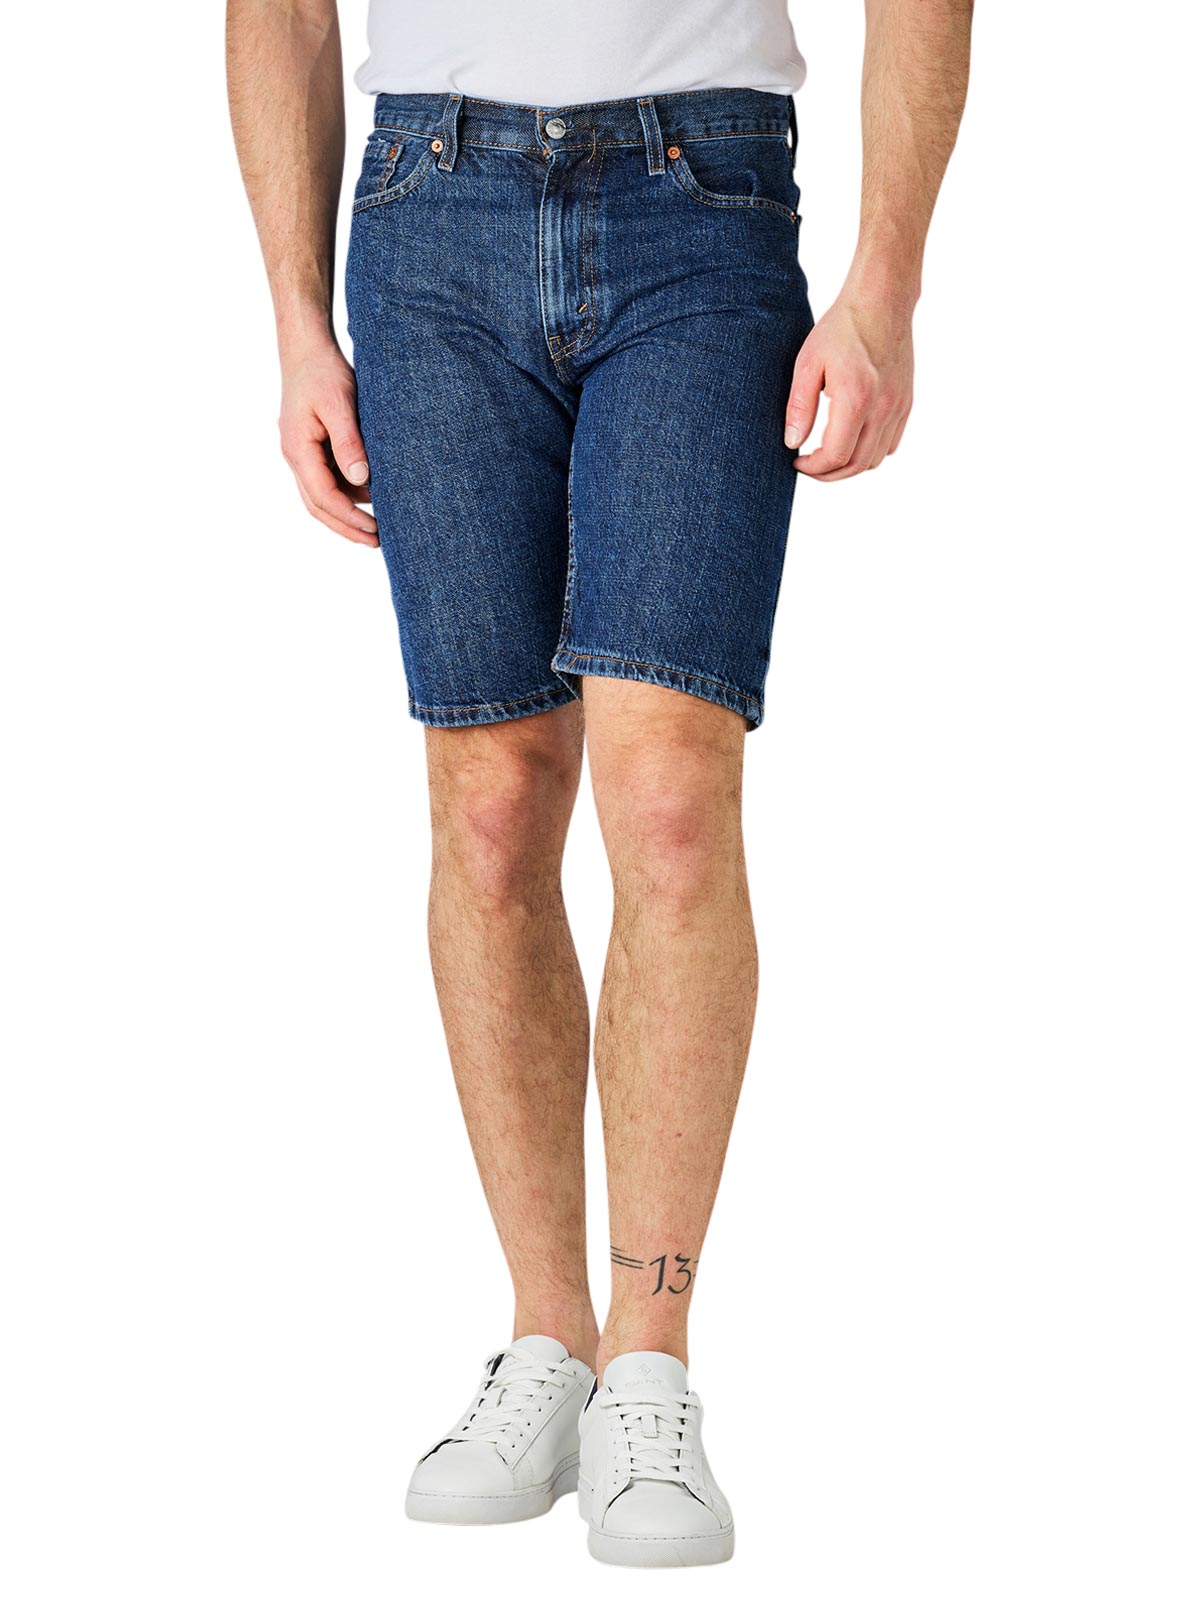 Levi's 505 Jeans Shorts Dark Stonewash Levi's Men's Shorts | Free Shipping  on  - SIMPLY LOOK GOOD